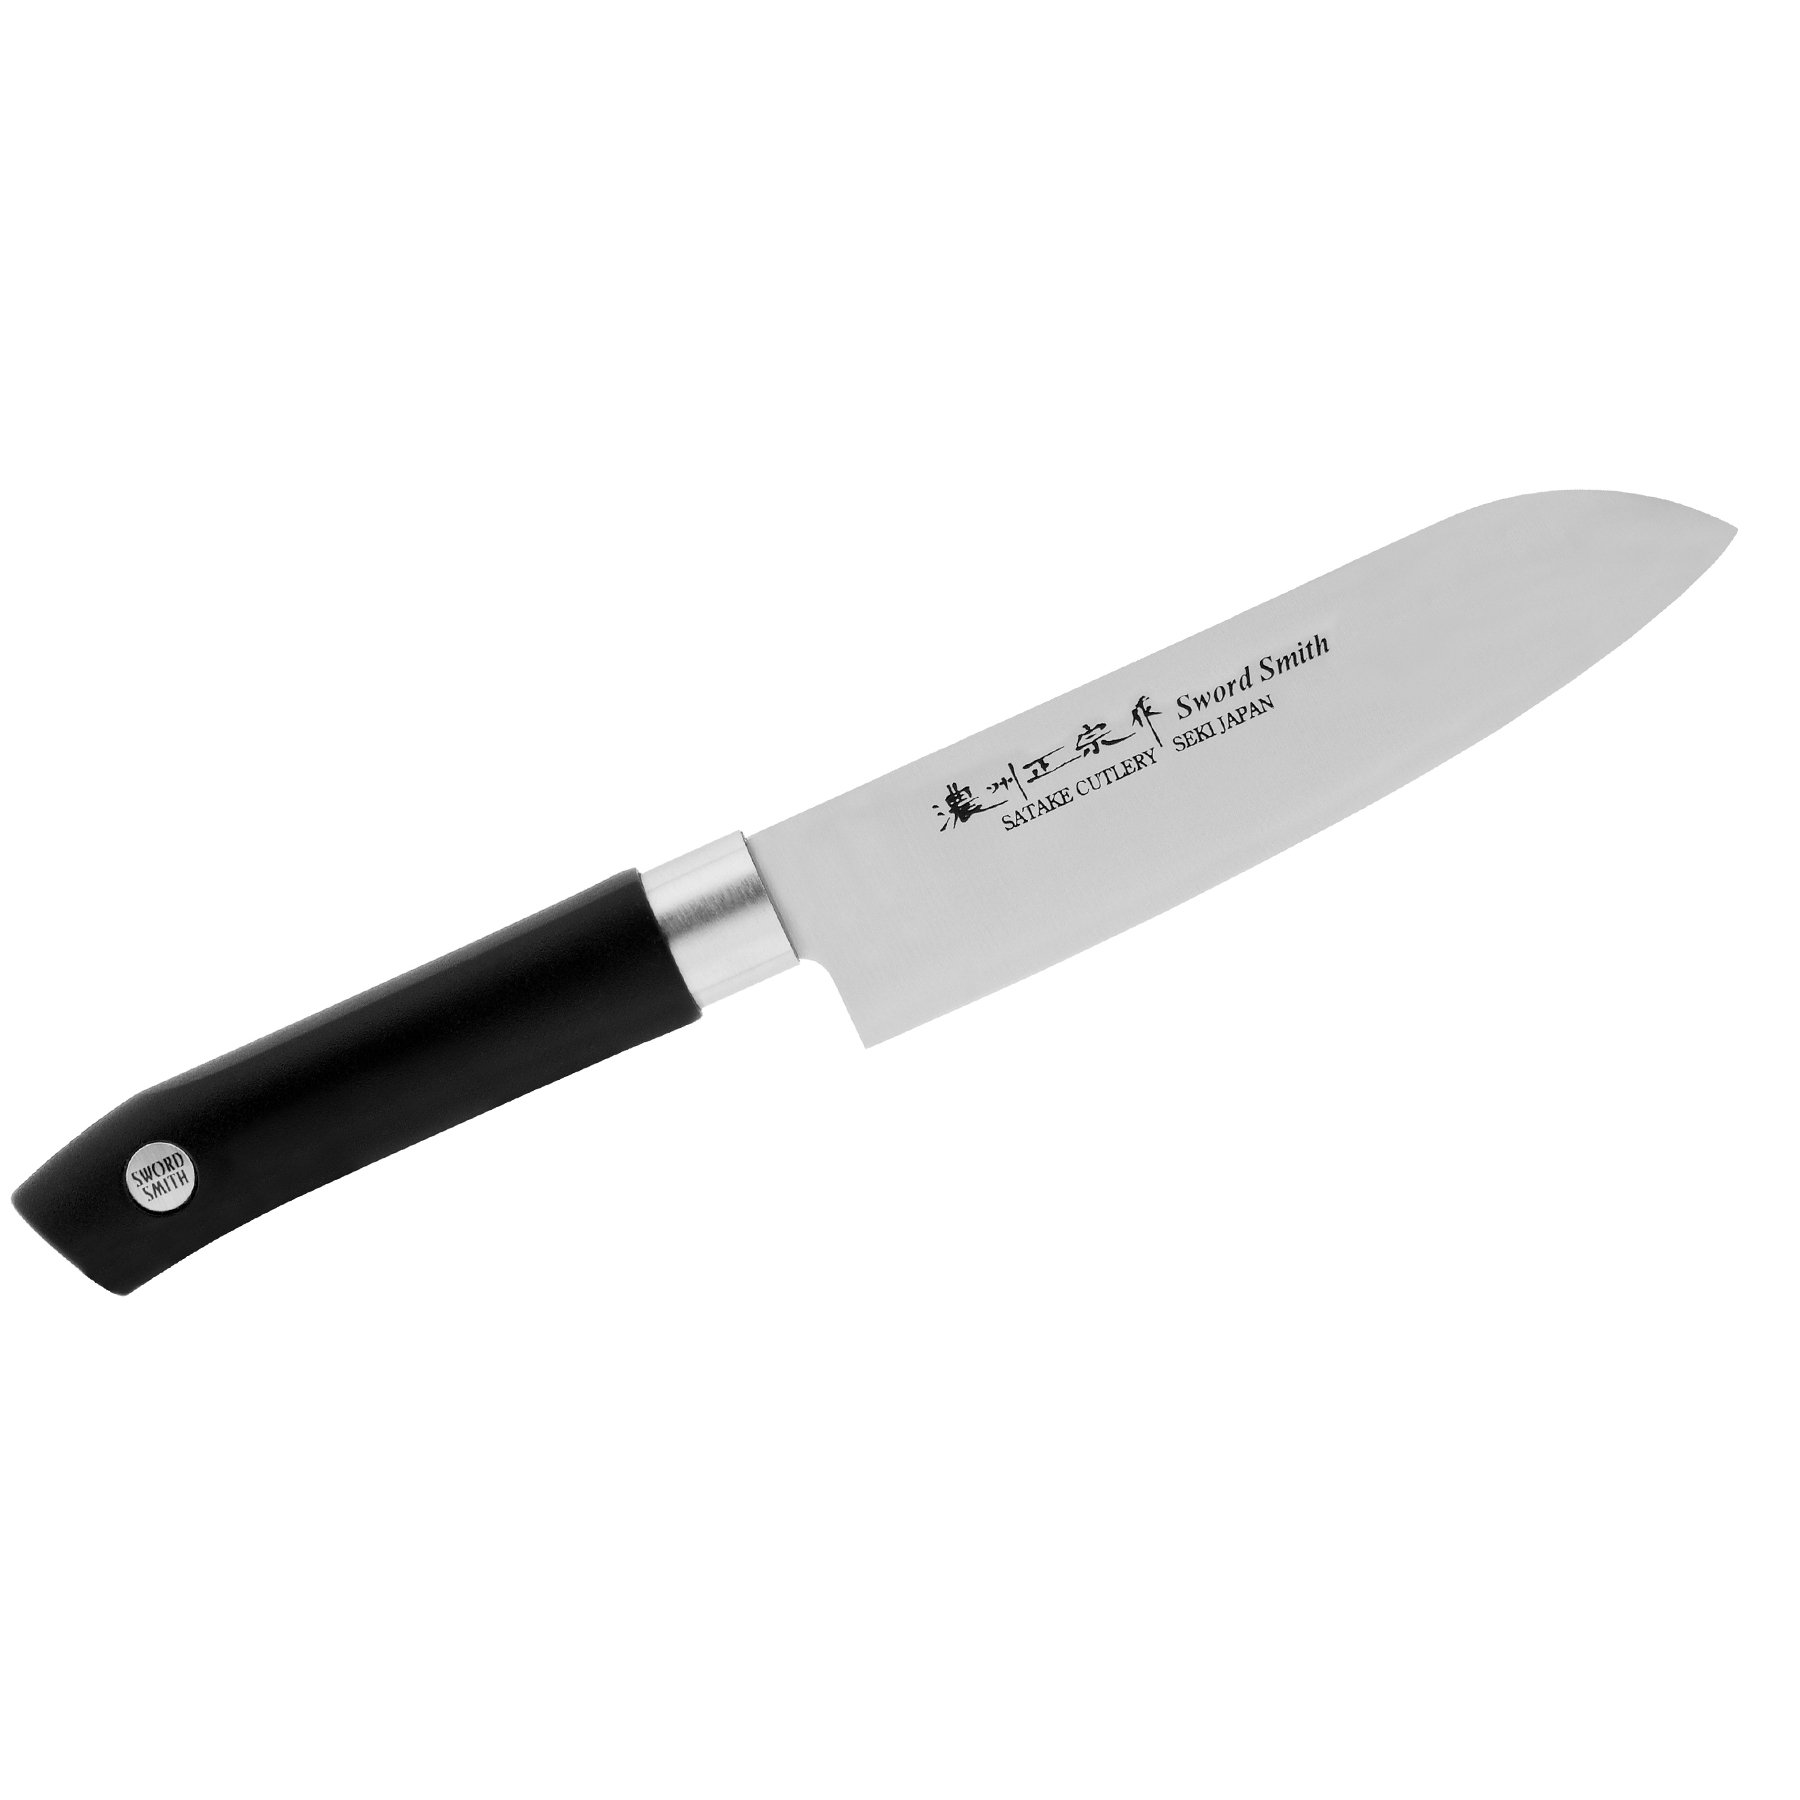 SATAKE Sword Smith 15 cm černý - nůž Santoku z nerezové oceli